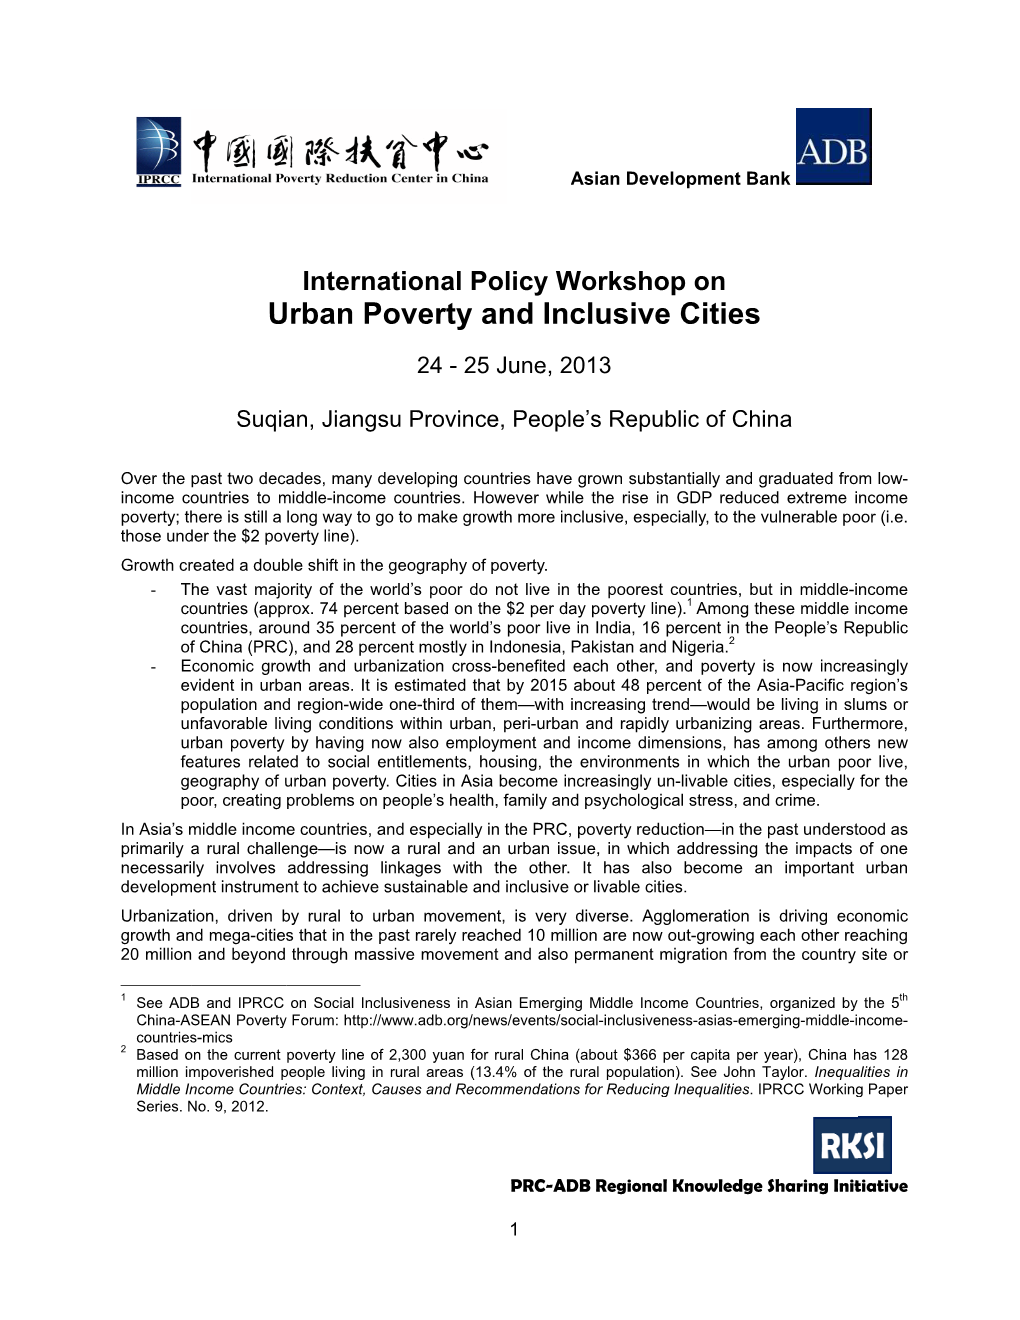 IPRCC-ADB International Policy Workshop: Urban Poverty And